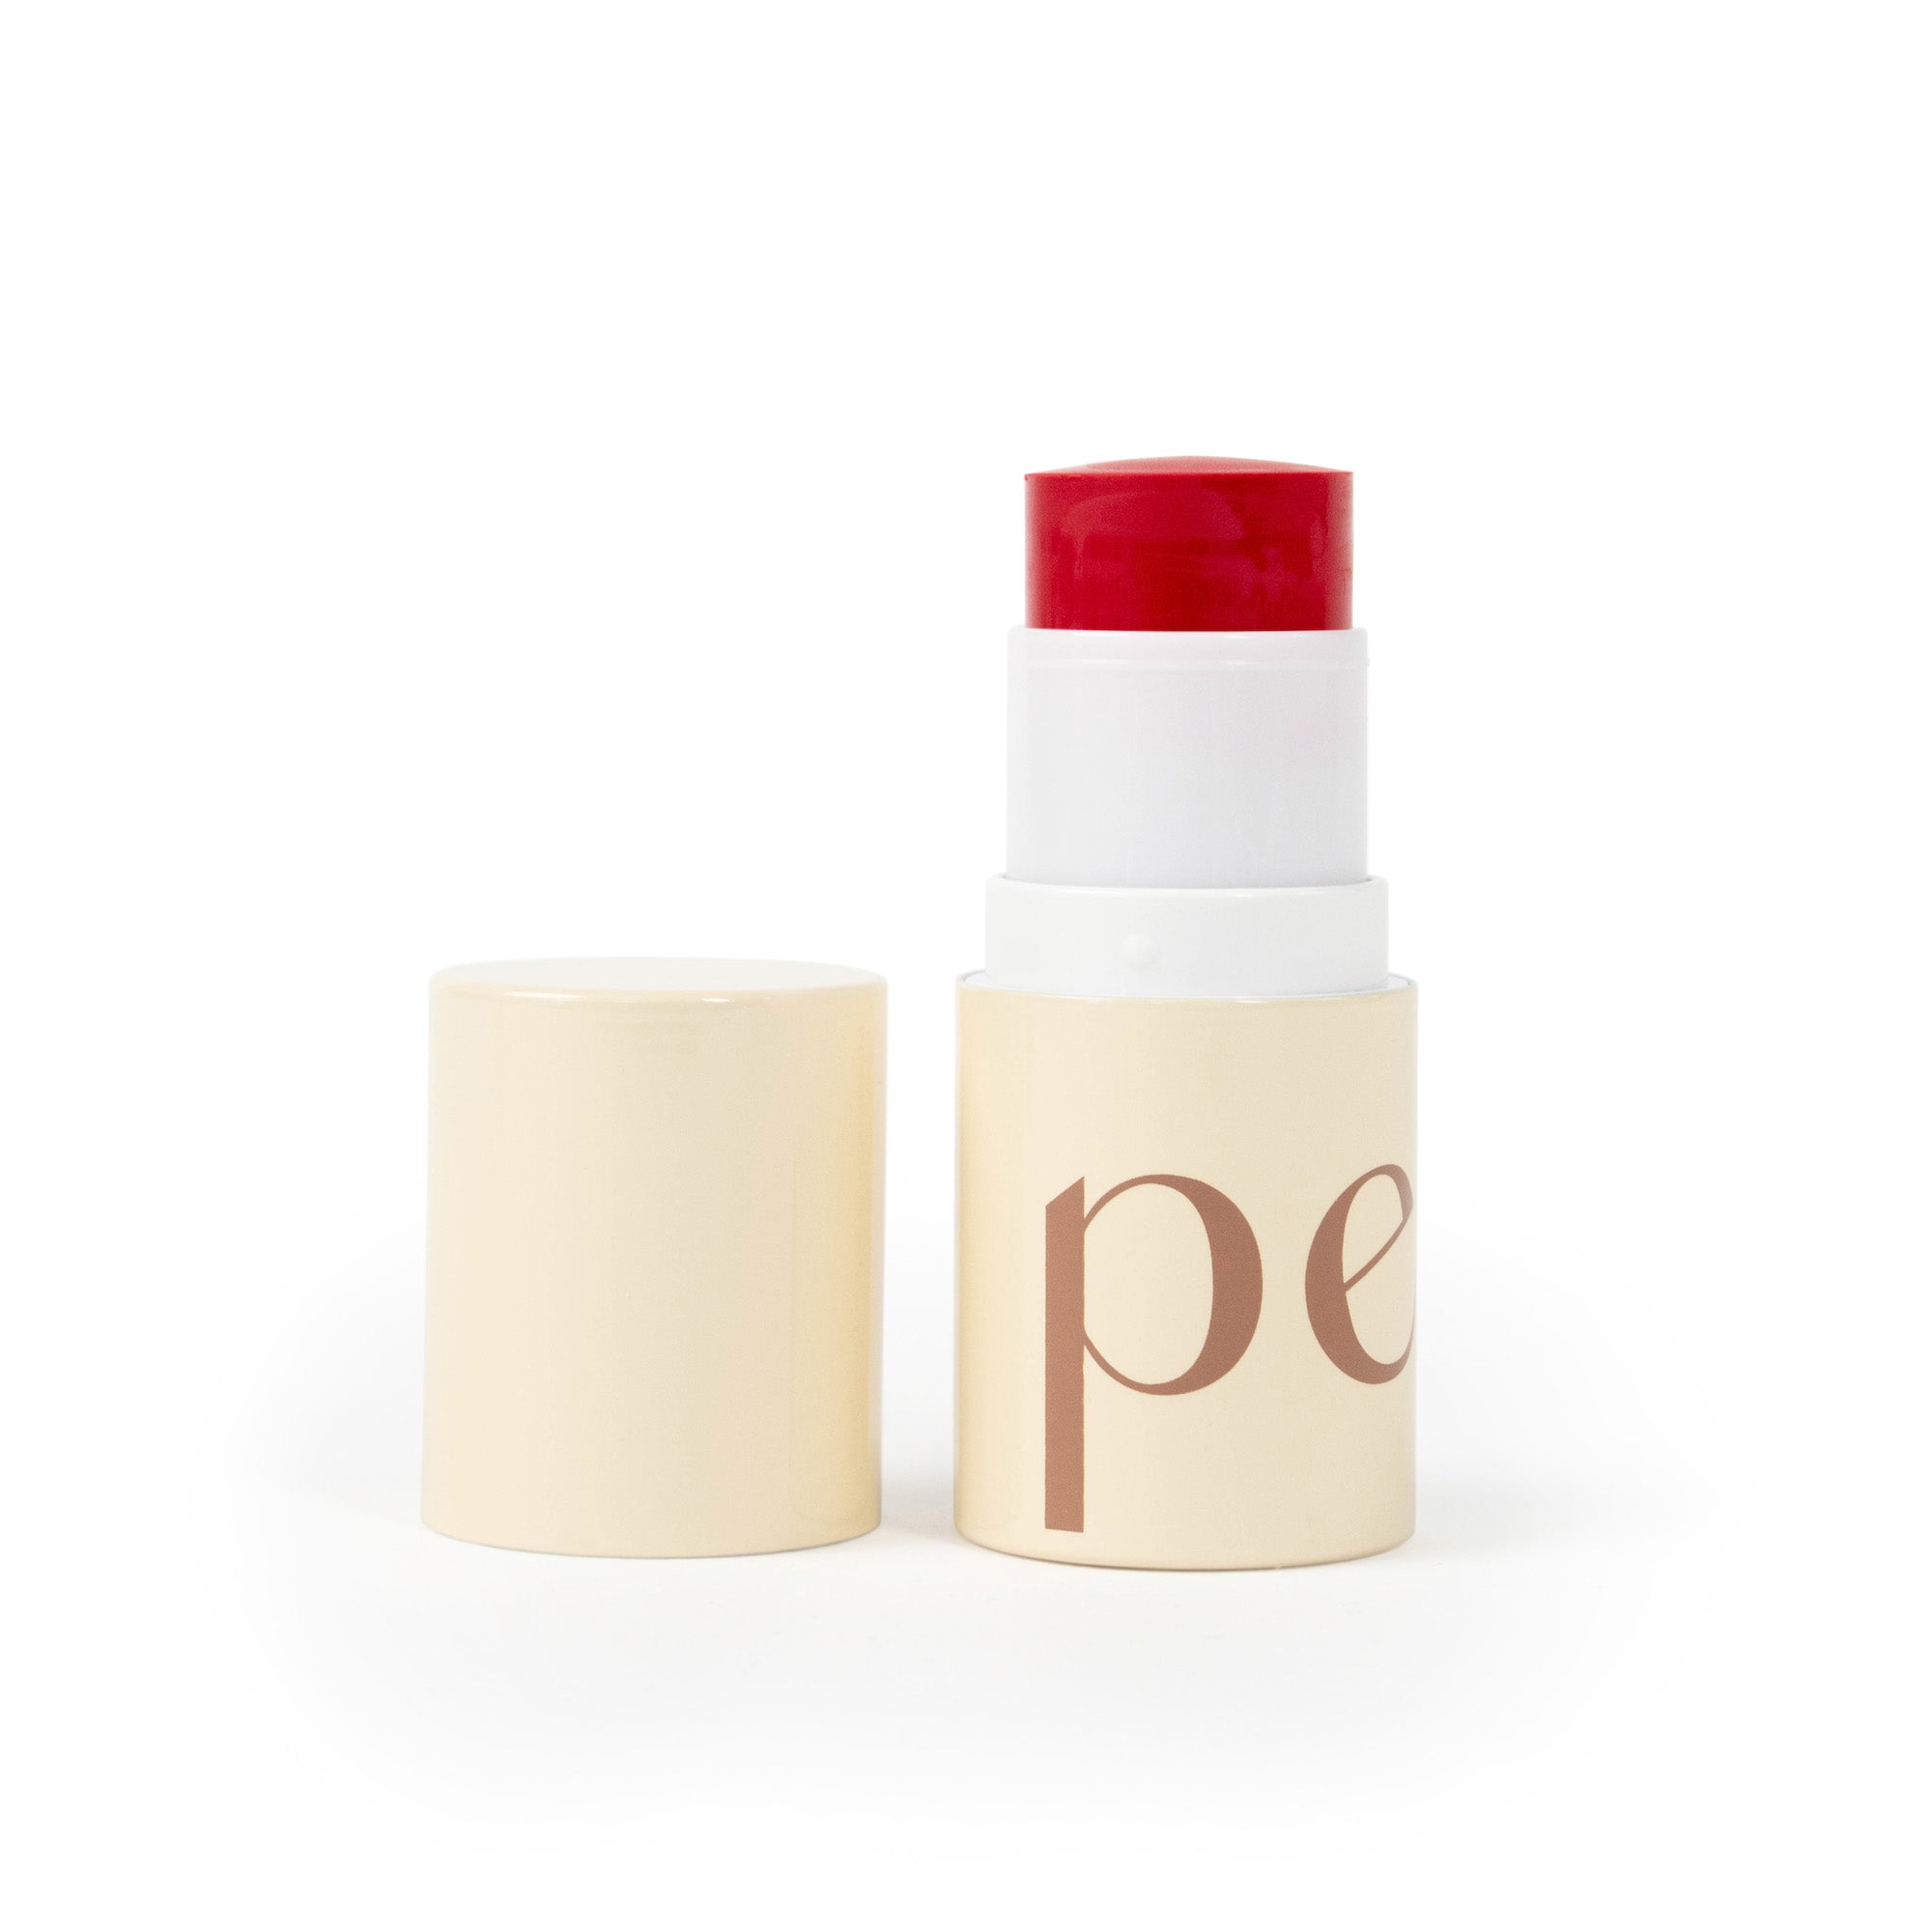 Pearl Beauty Multi Purpose Lip & Face Sticks